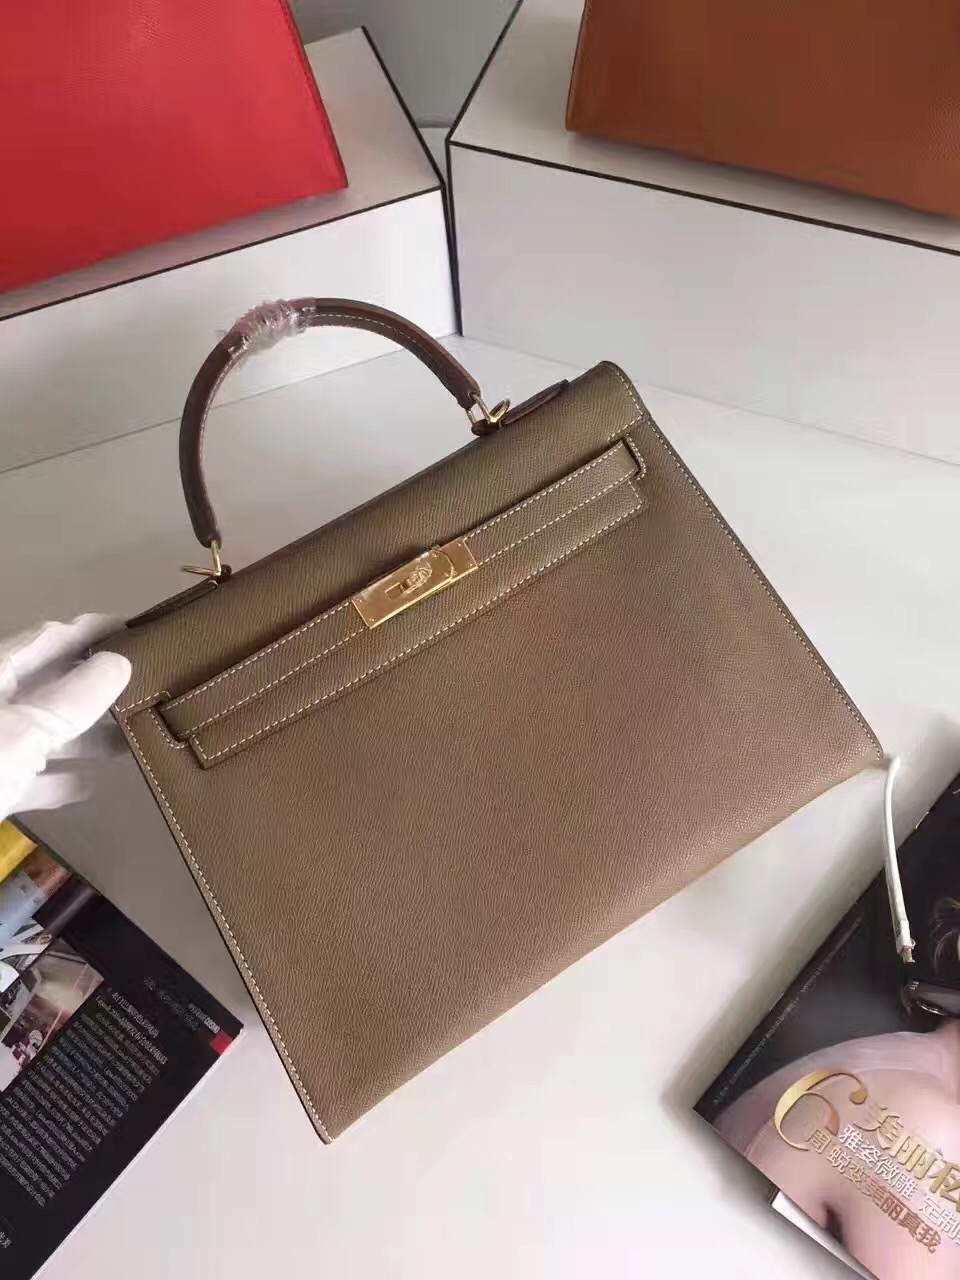 Hermes Epsom 32cm leather Kelly top gray handbags